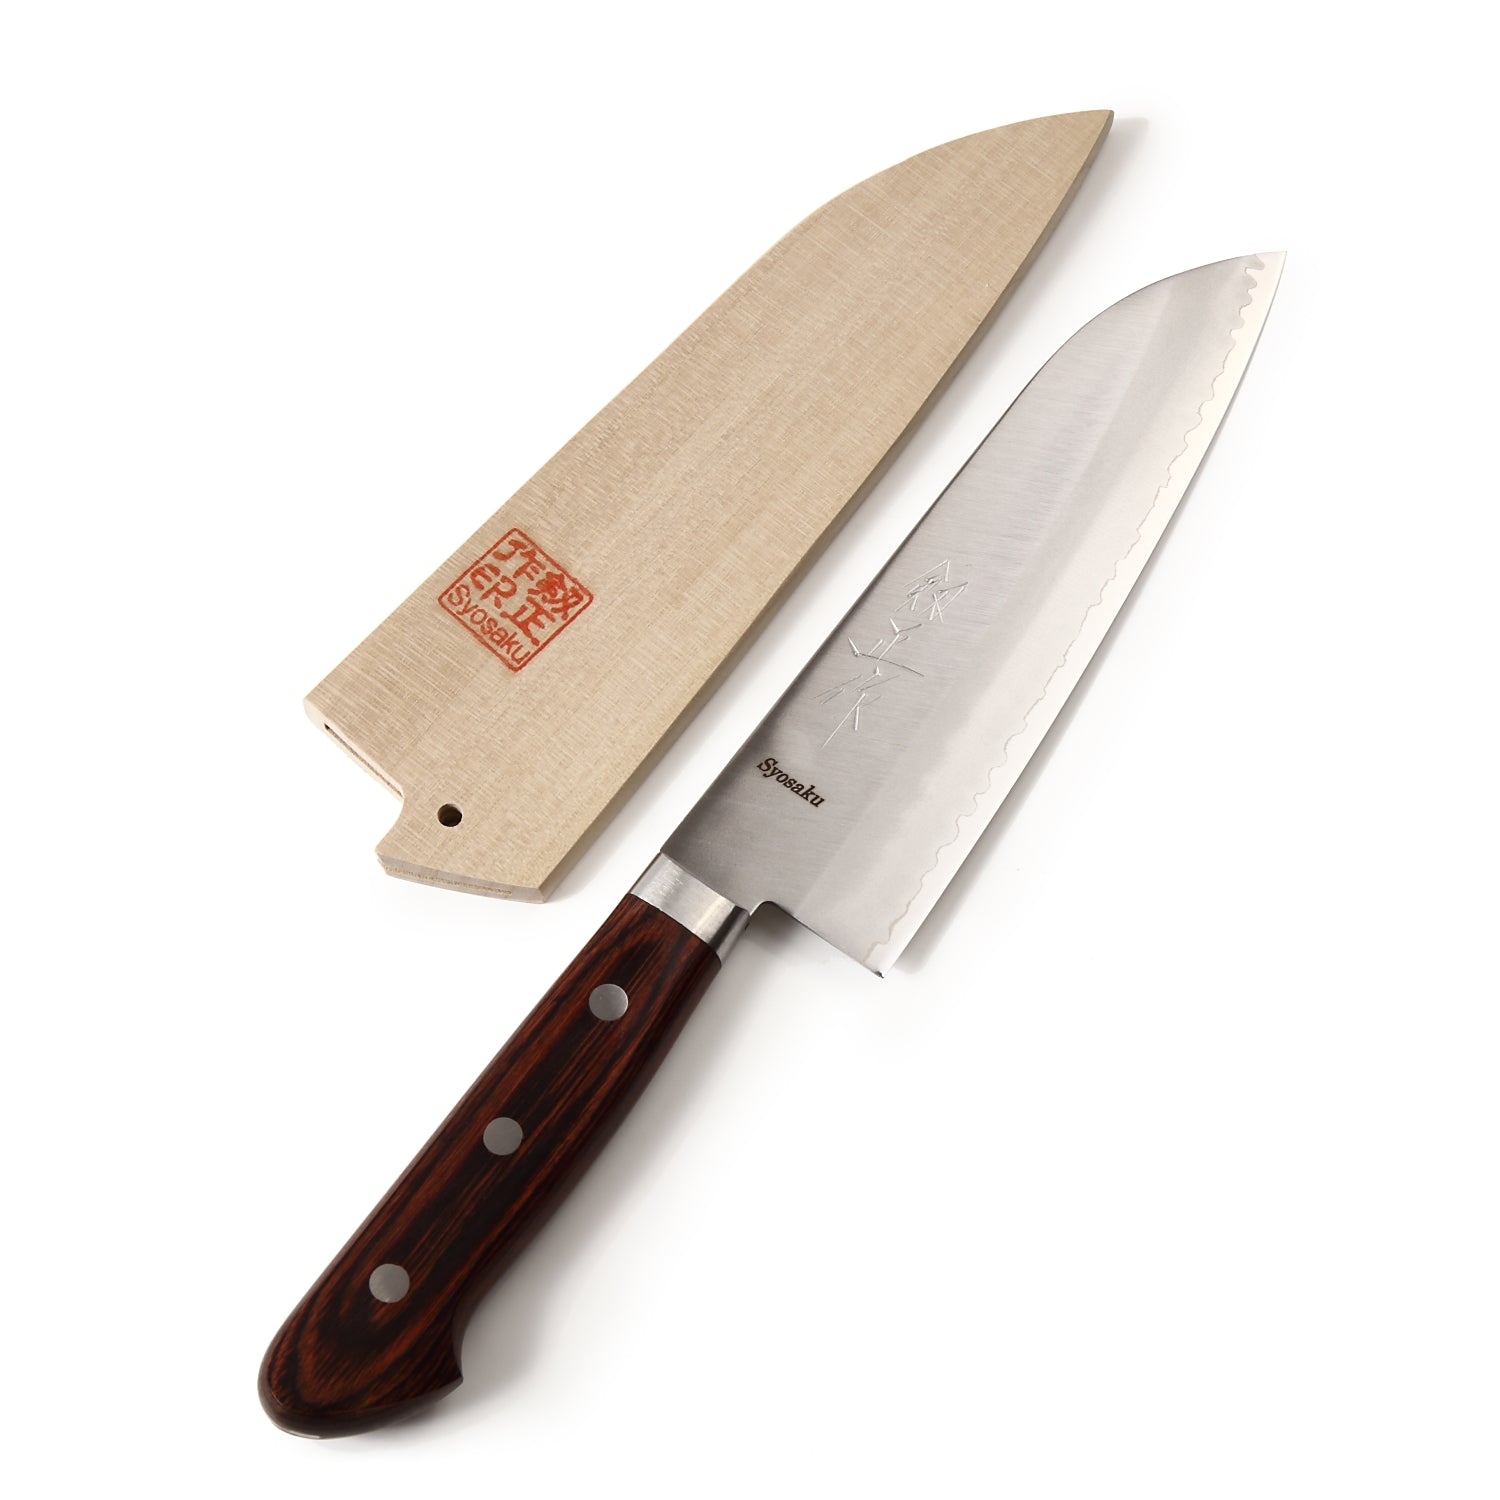 Syosaku Japanese Multi-Purpose Chef Knife VG-1 Gold Stainless Steel Mahogany Handle, Santoku 6.5-inch (165mm) with Magnoila Wood Sheath Saya Cover